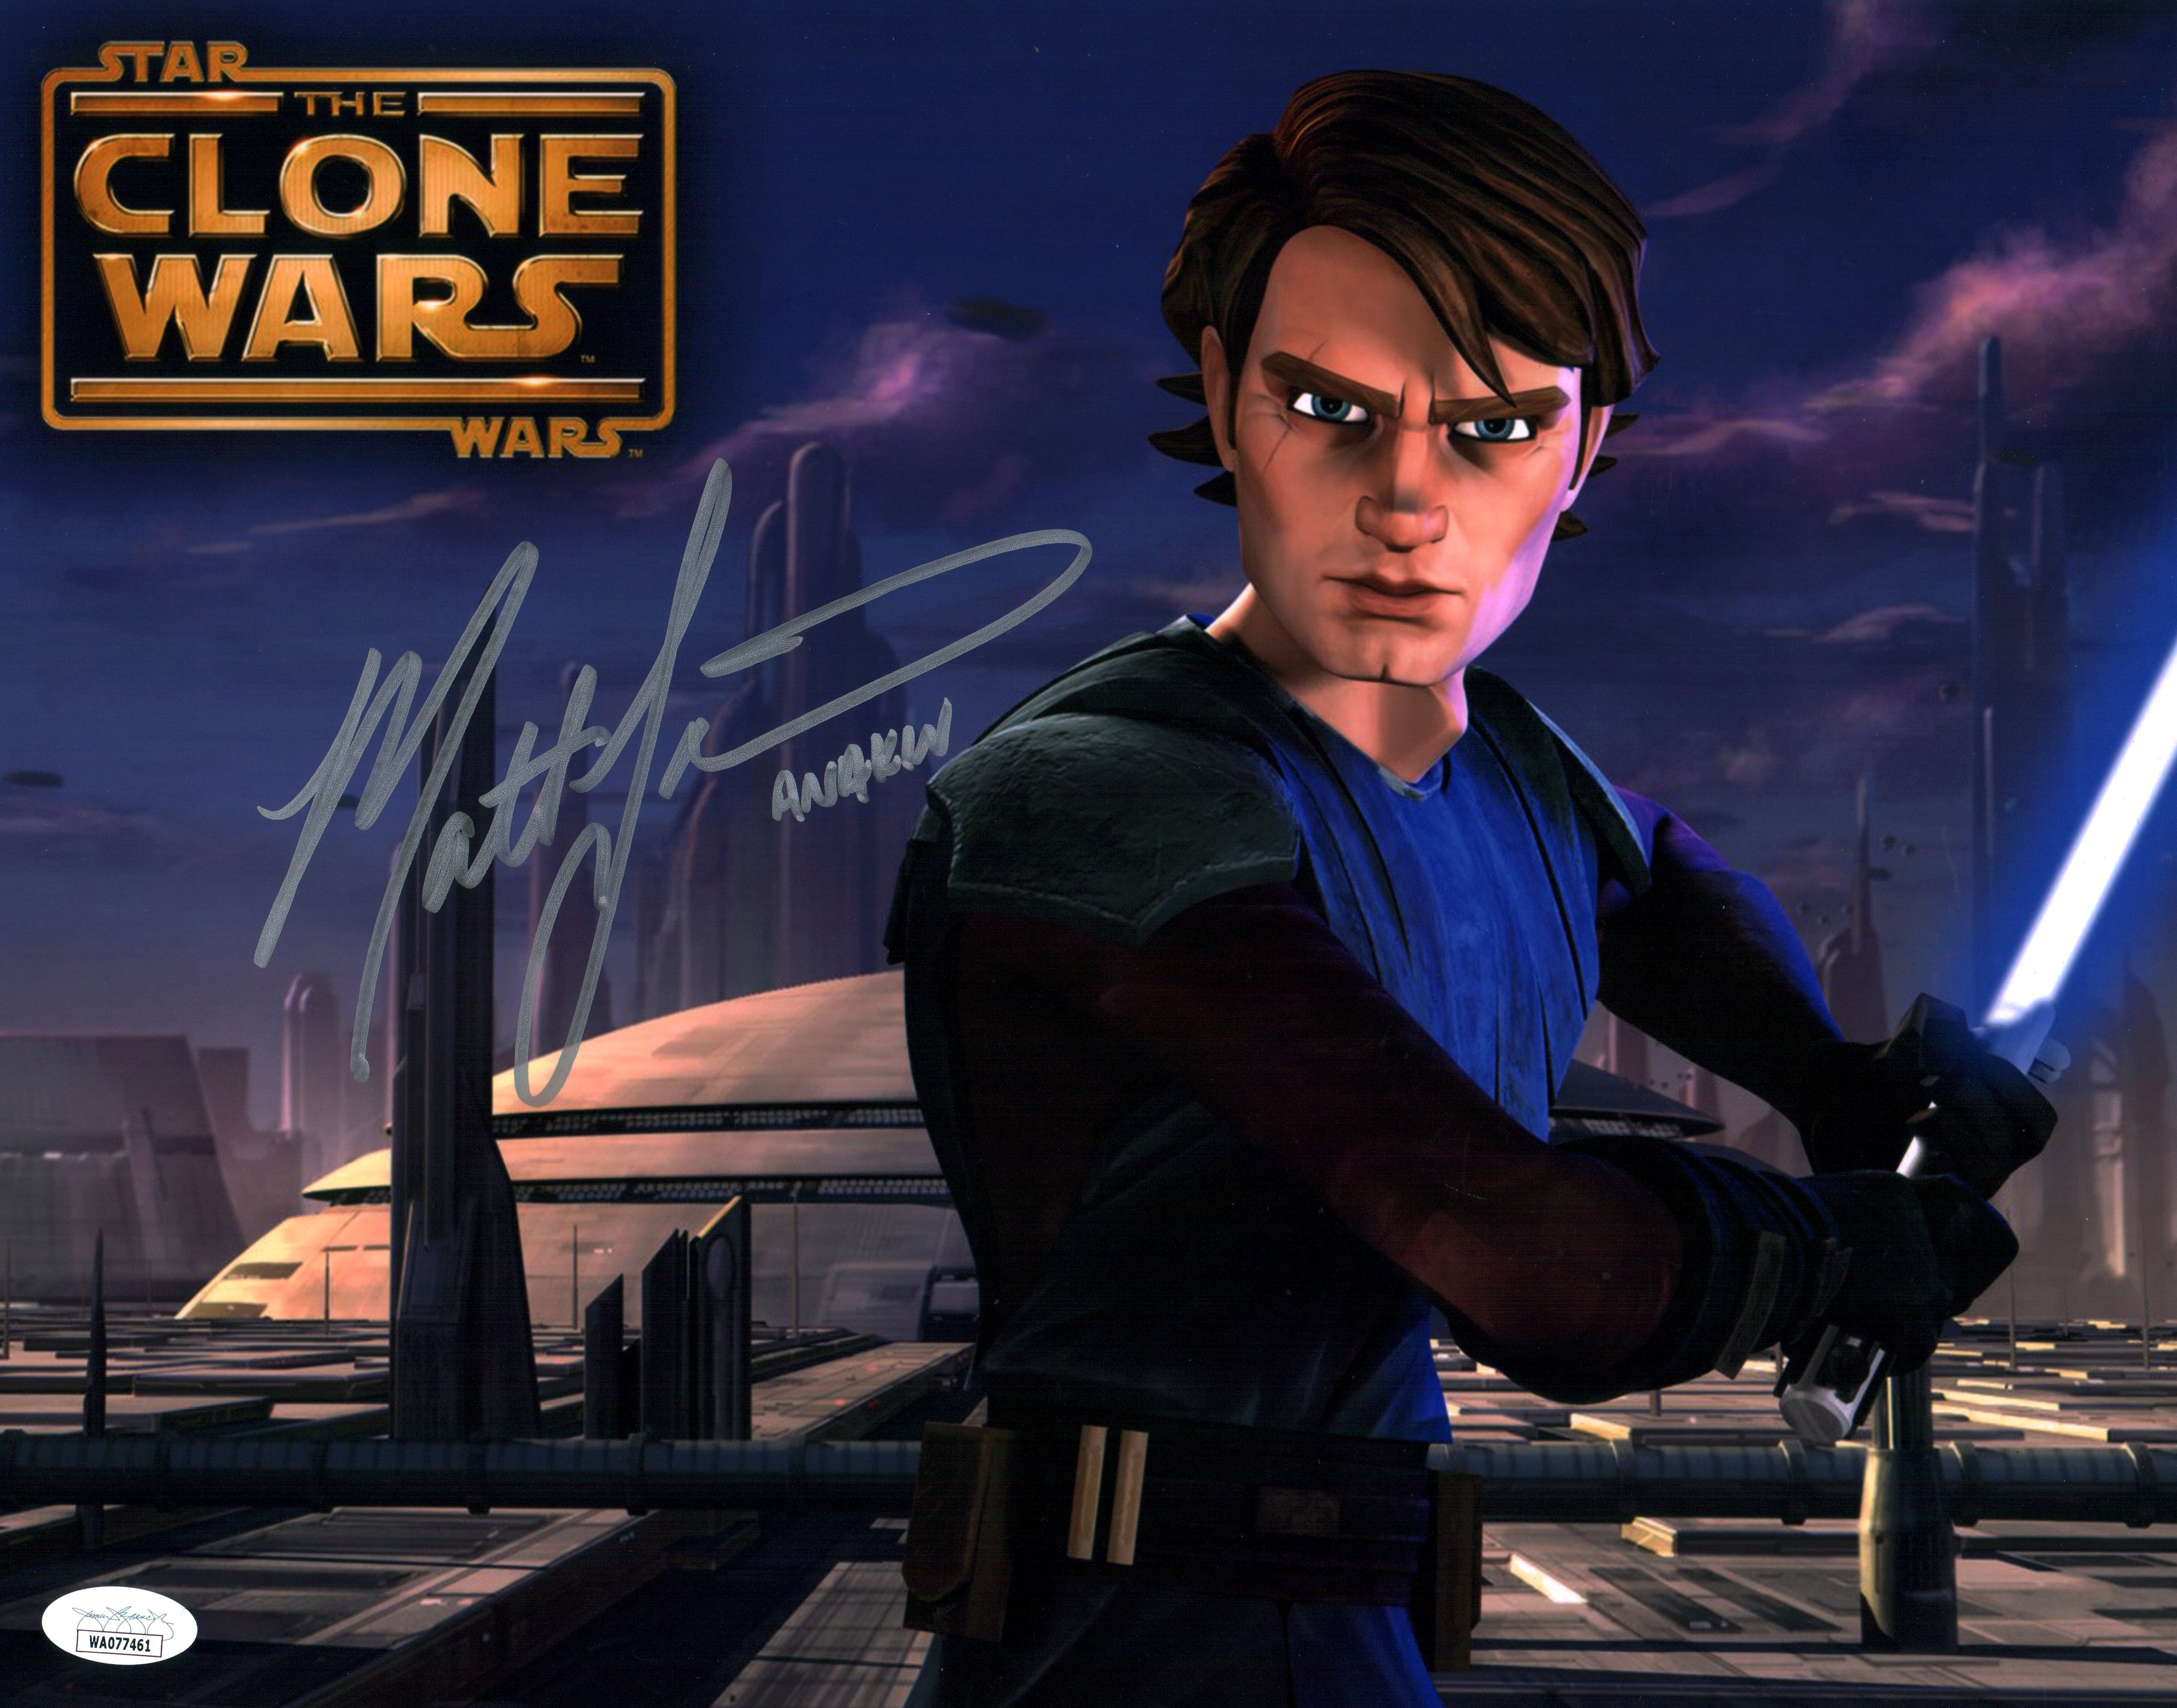 Matt Lanter Star Wars Clone Wars 11x14 Signed Photo Poster JSA Certified Autograph